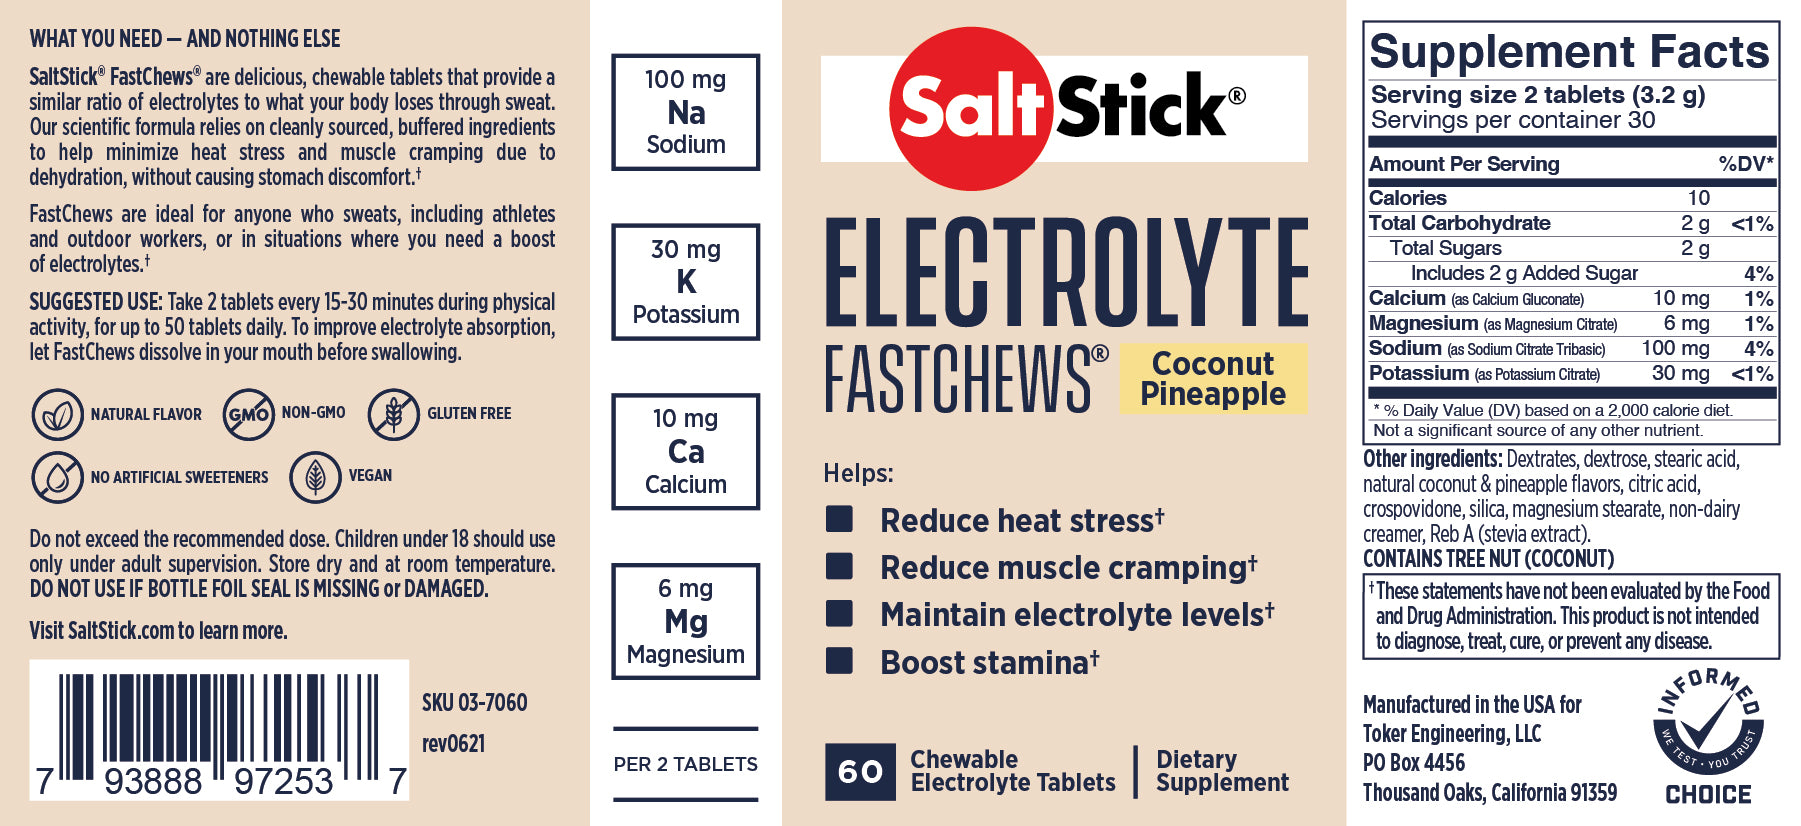 SaltStick FastChews Chewable Electrolyte Tablets Coconut Pineapple Label